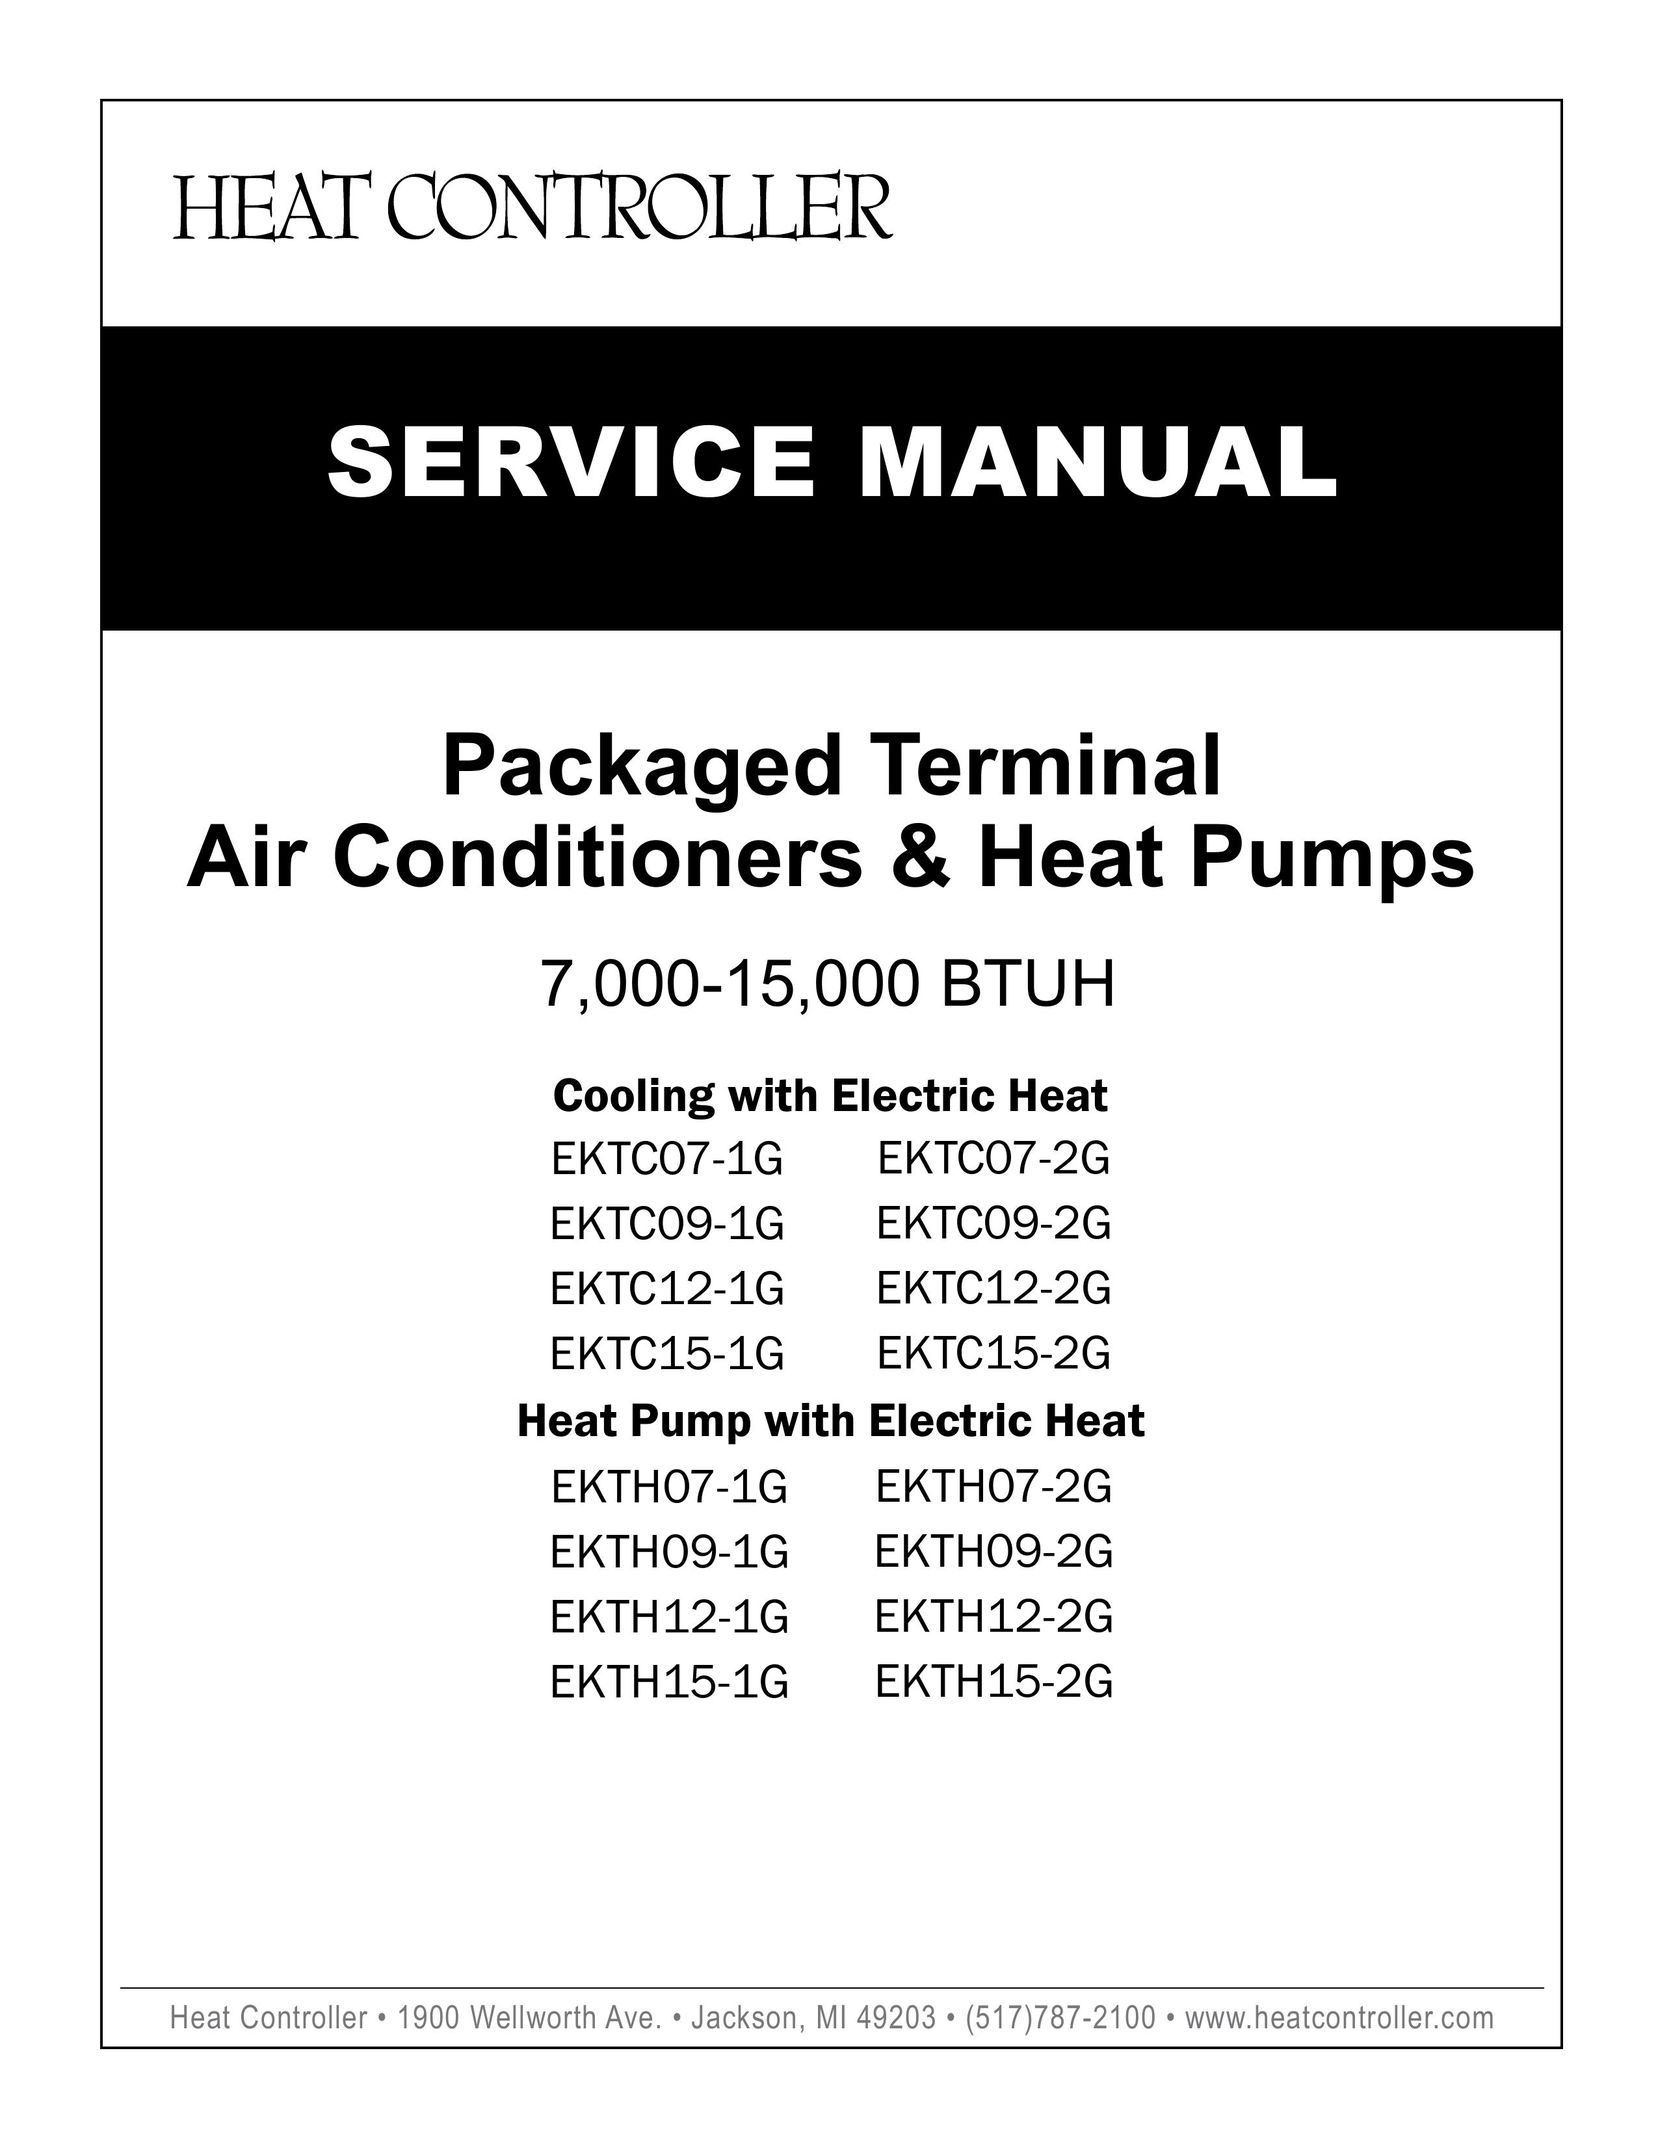 Heat Controller EKTC15-2G Heat Pump User Manual